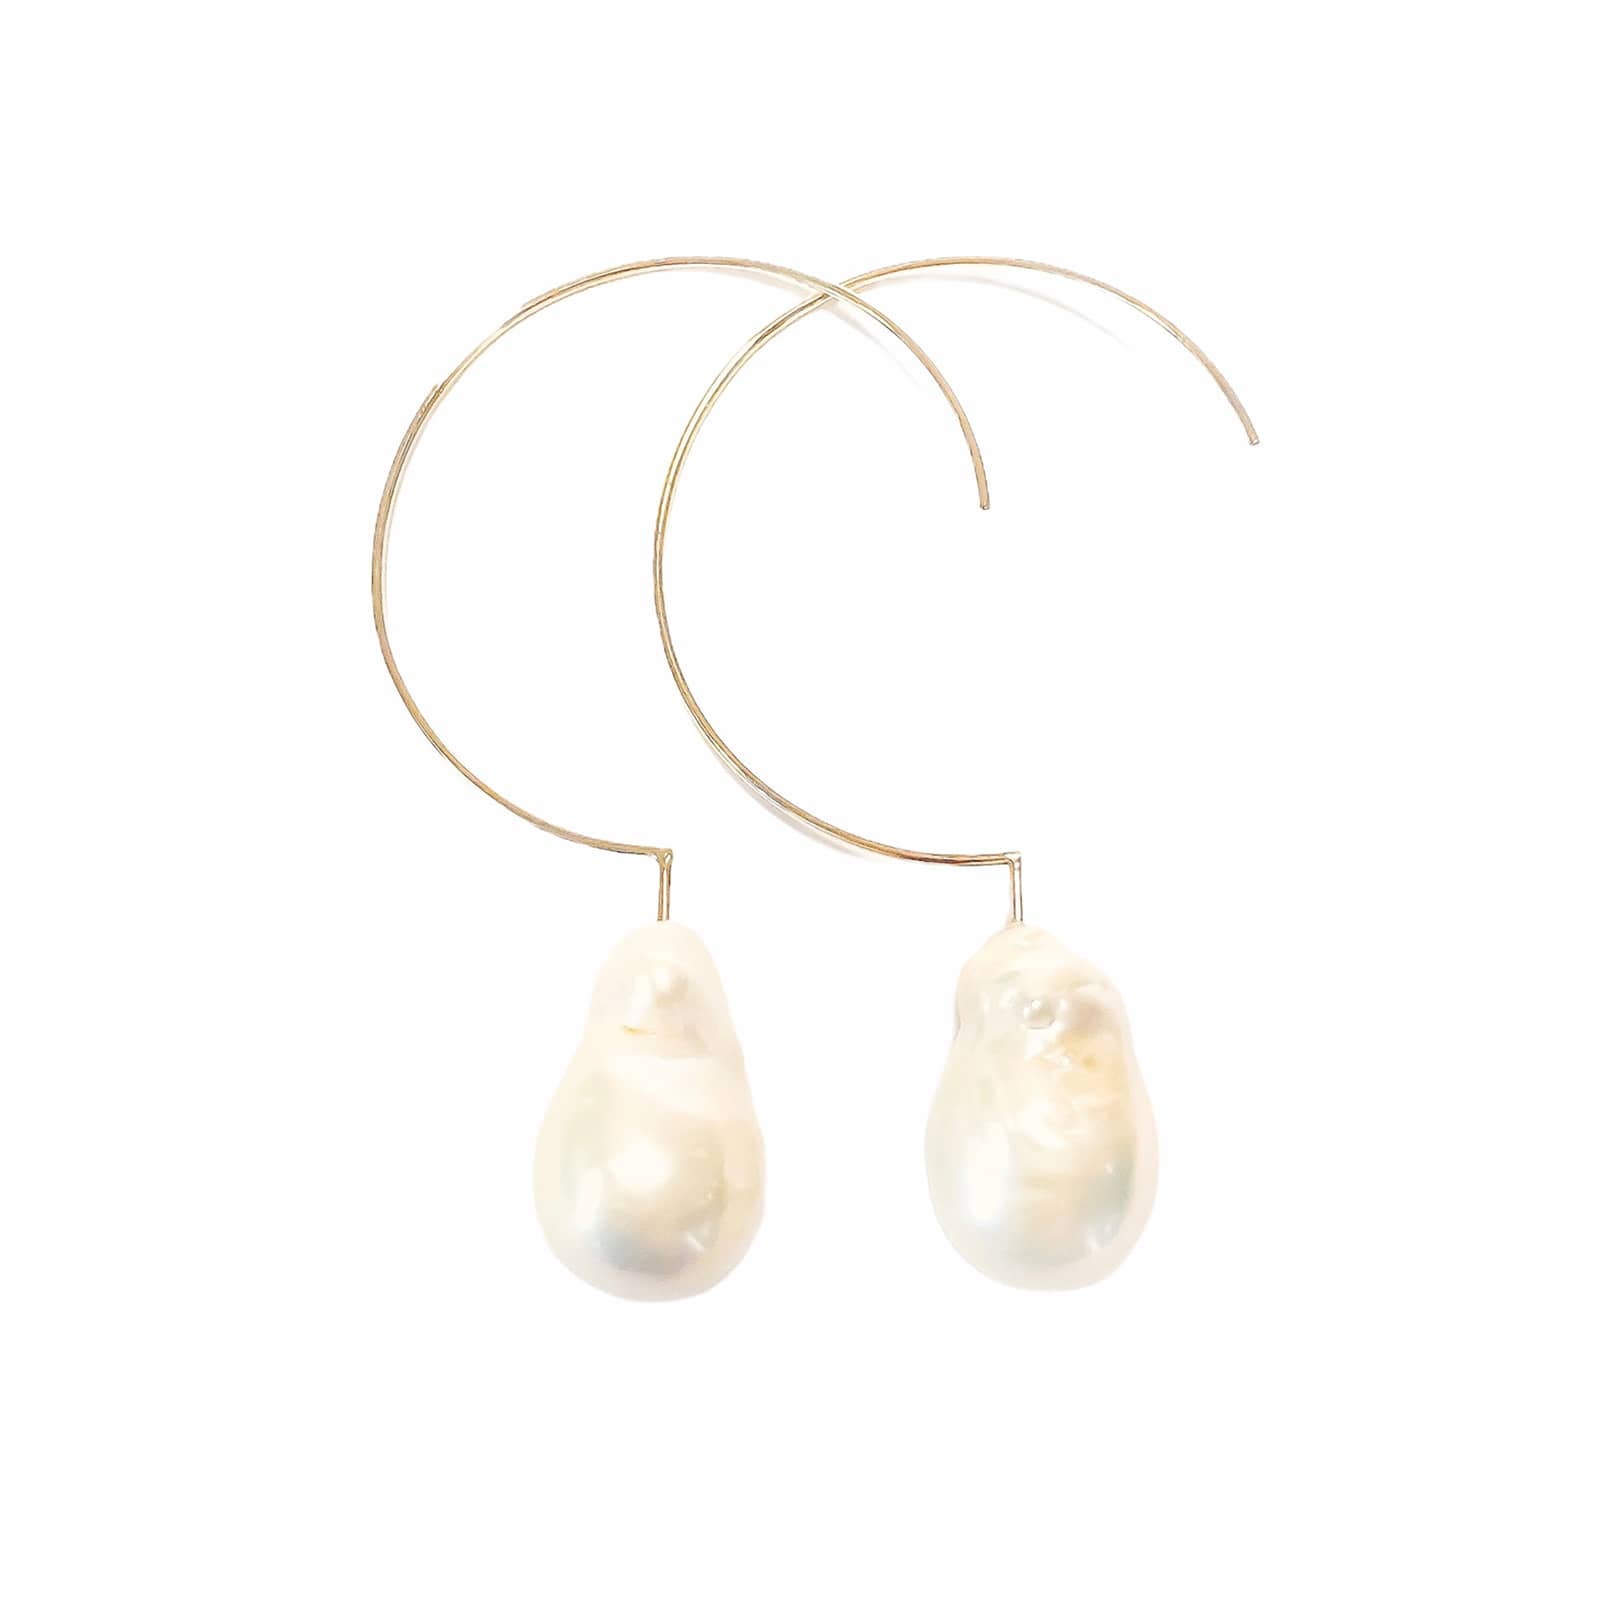 Simple Baroque 14 kt gold earrings.